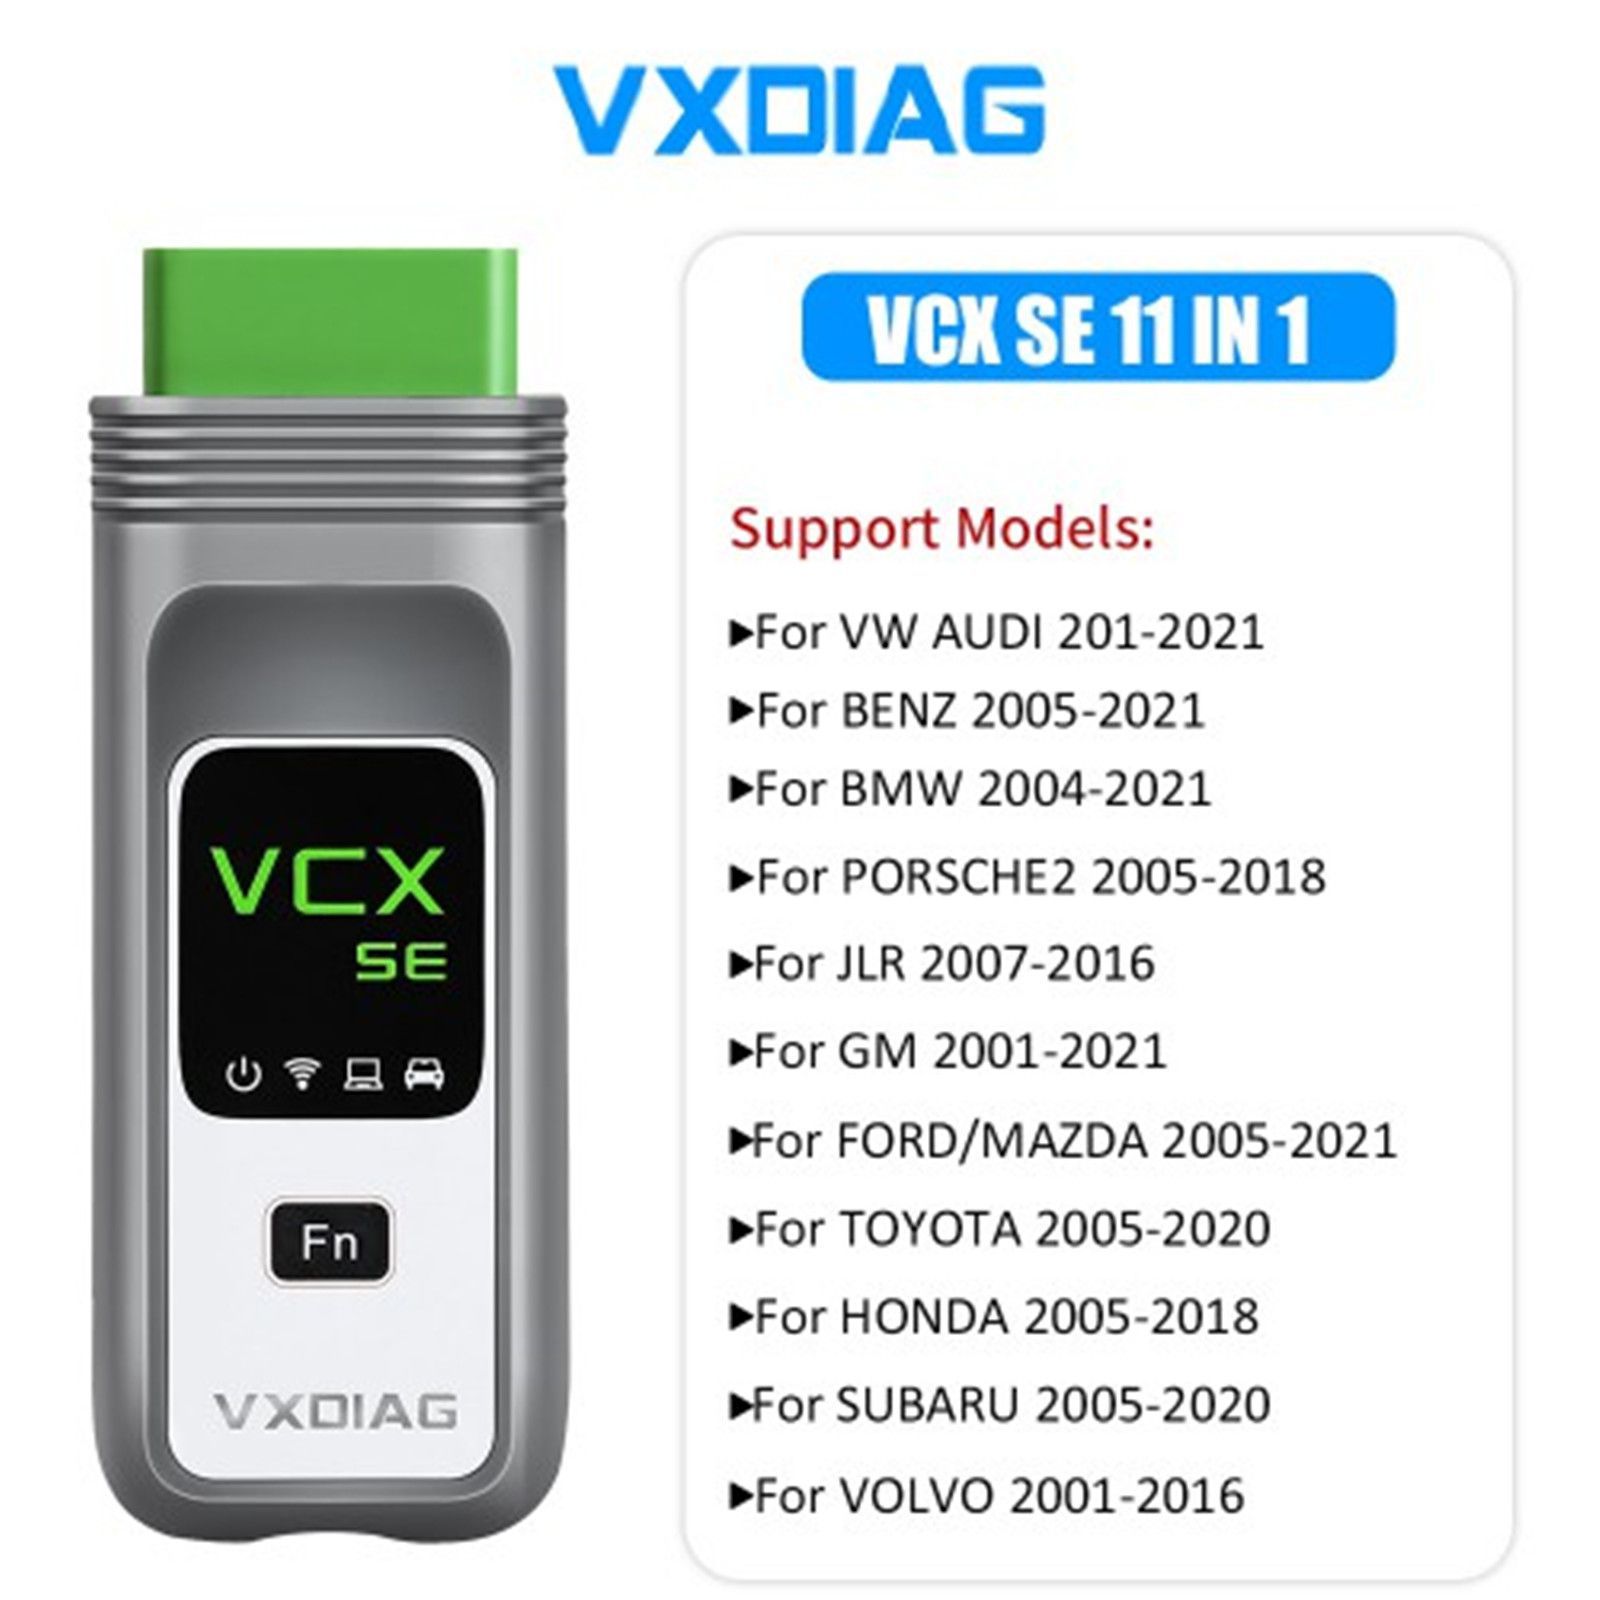 Vxdiag vcx se doip matériel diagnostic de marque complète, jlr Honda GM VW Ford Mazda Toyota Subaru Volvo BMW Benz 2tb disque dur